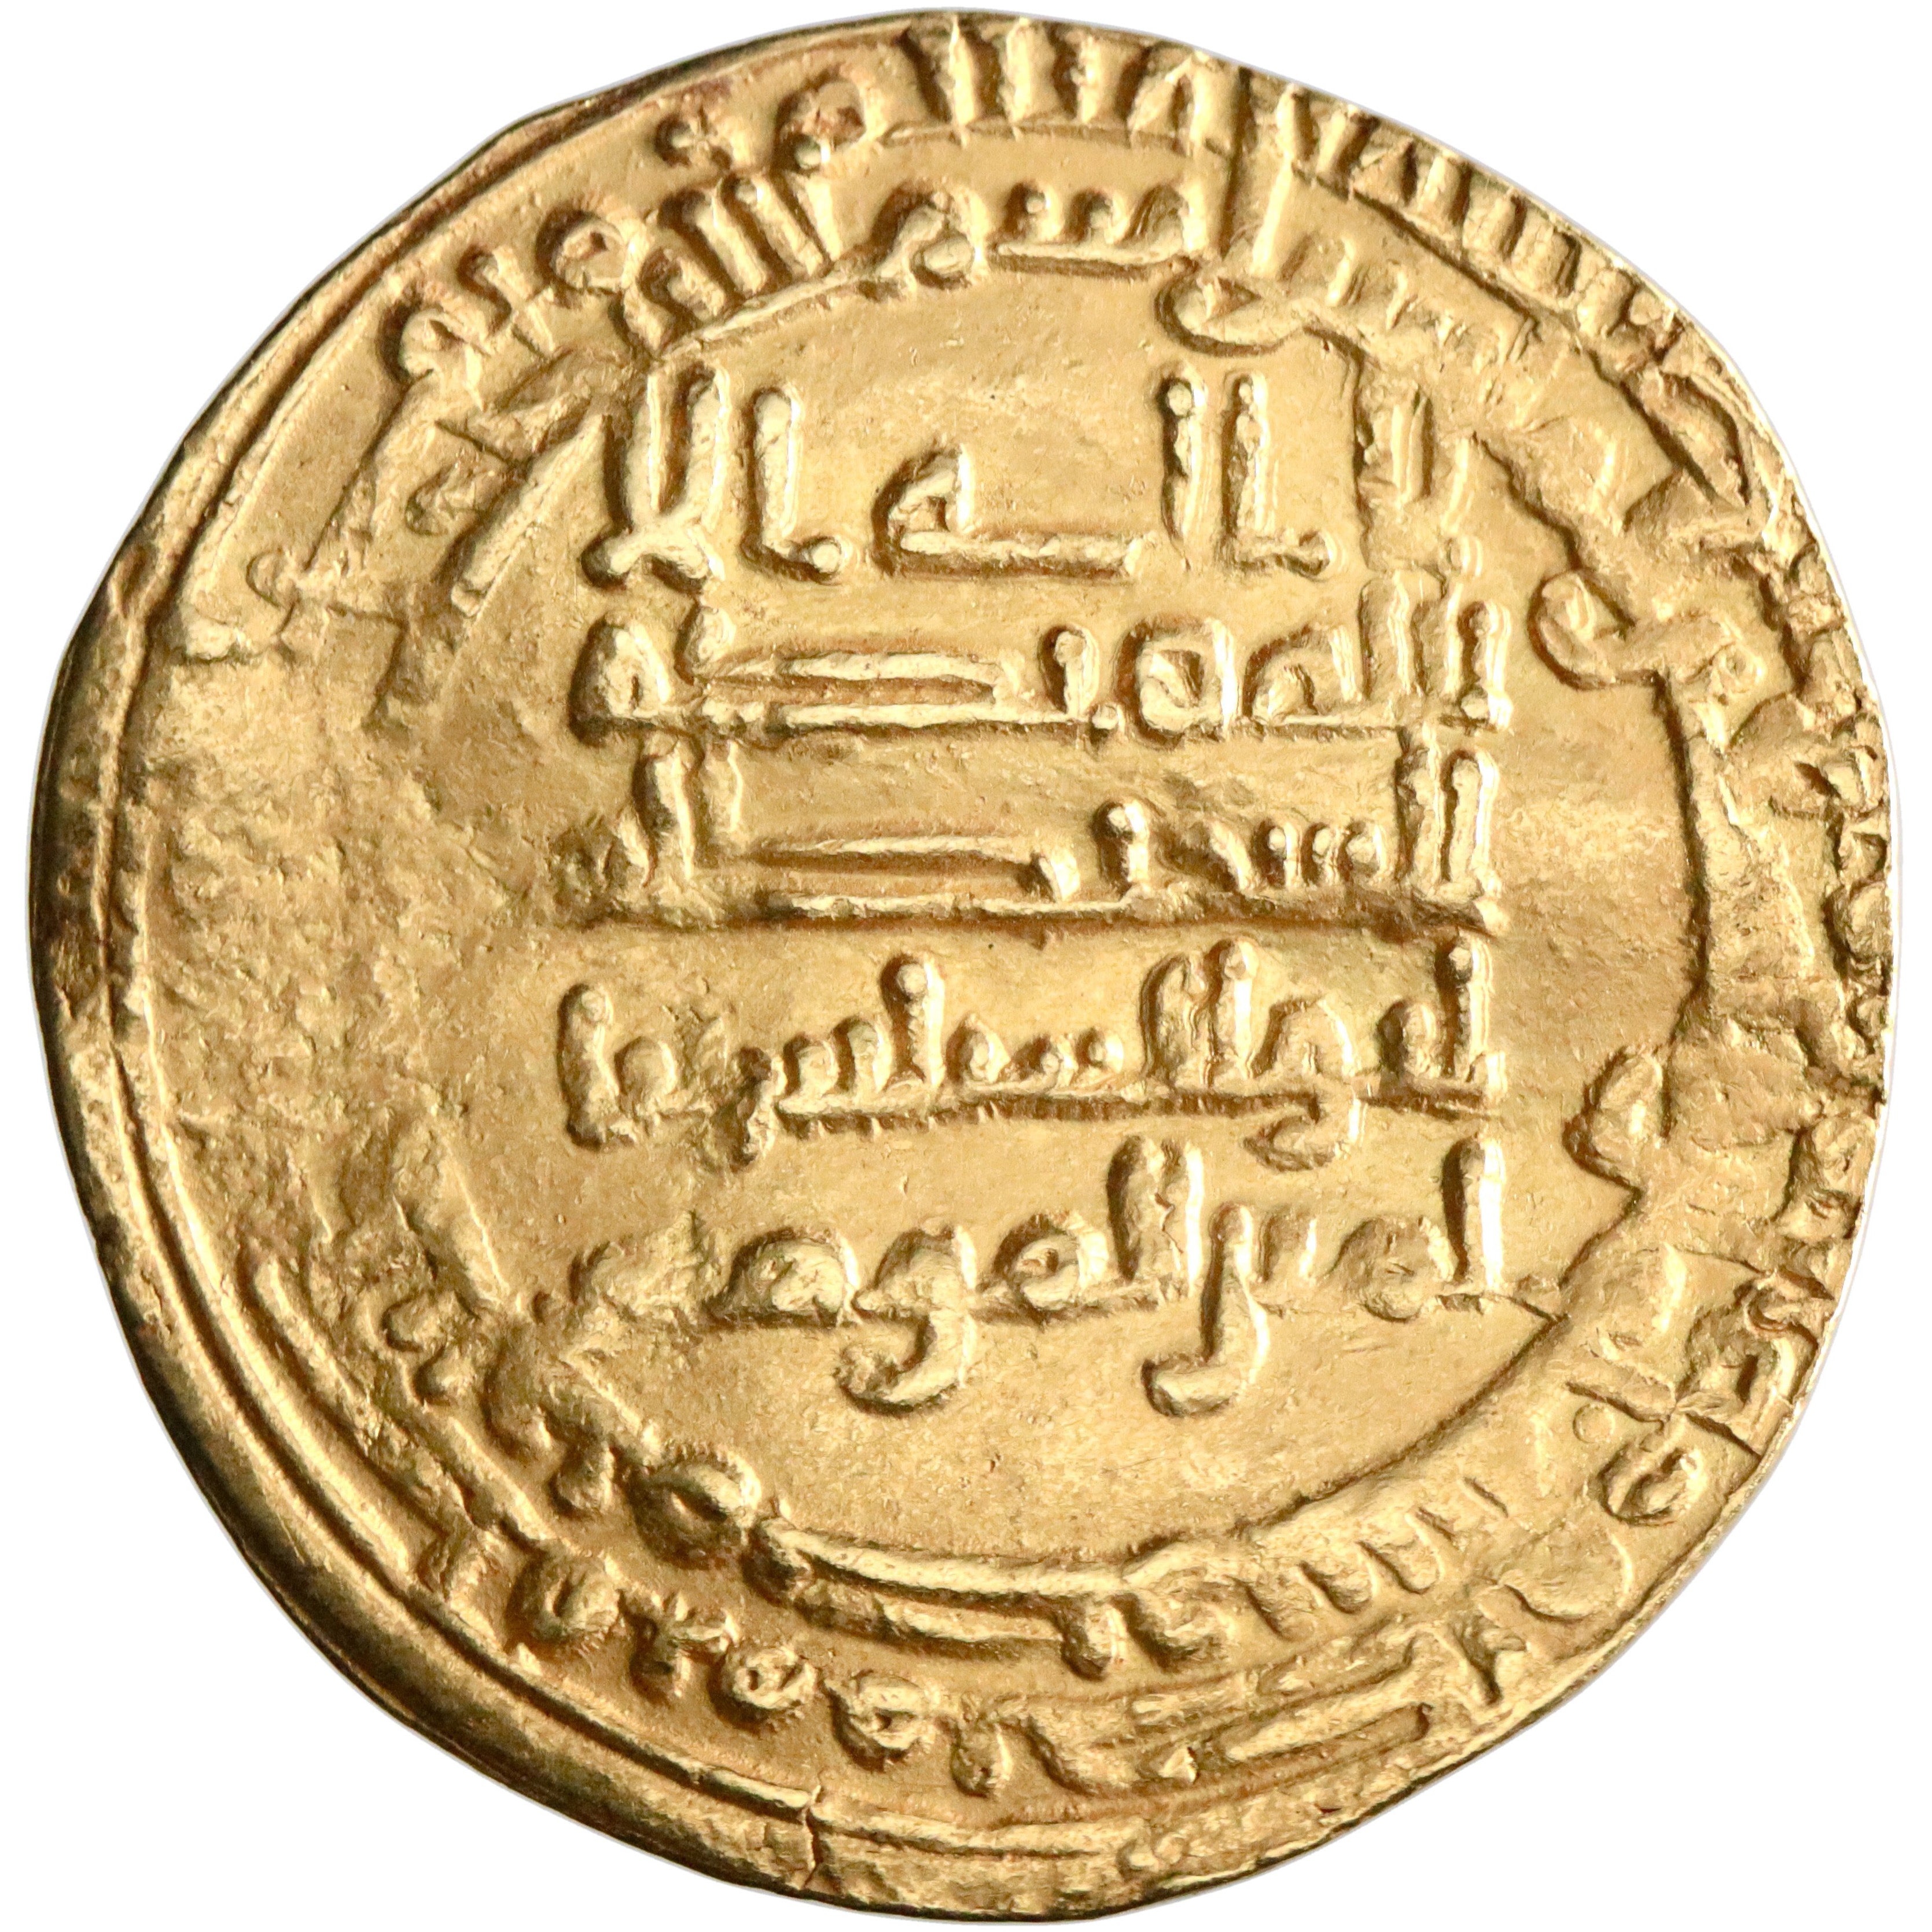 Abbasid, al-Muqtadir, gold dinar, Misr (Egypt) mint, AH 298, citing Abu al-'Abbas